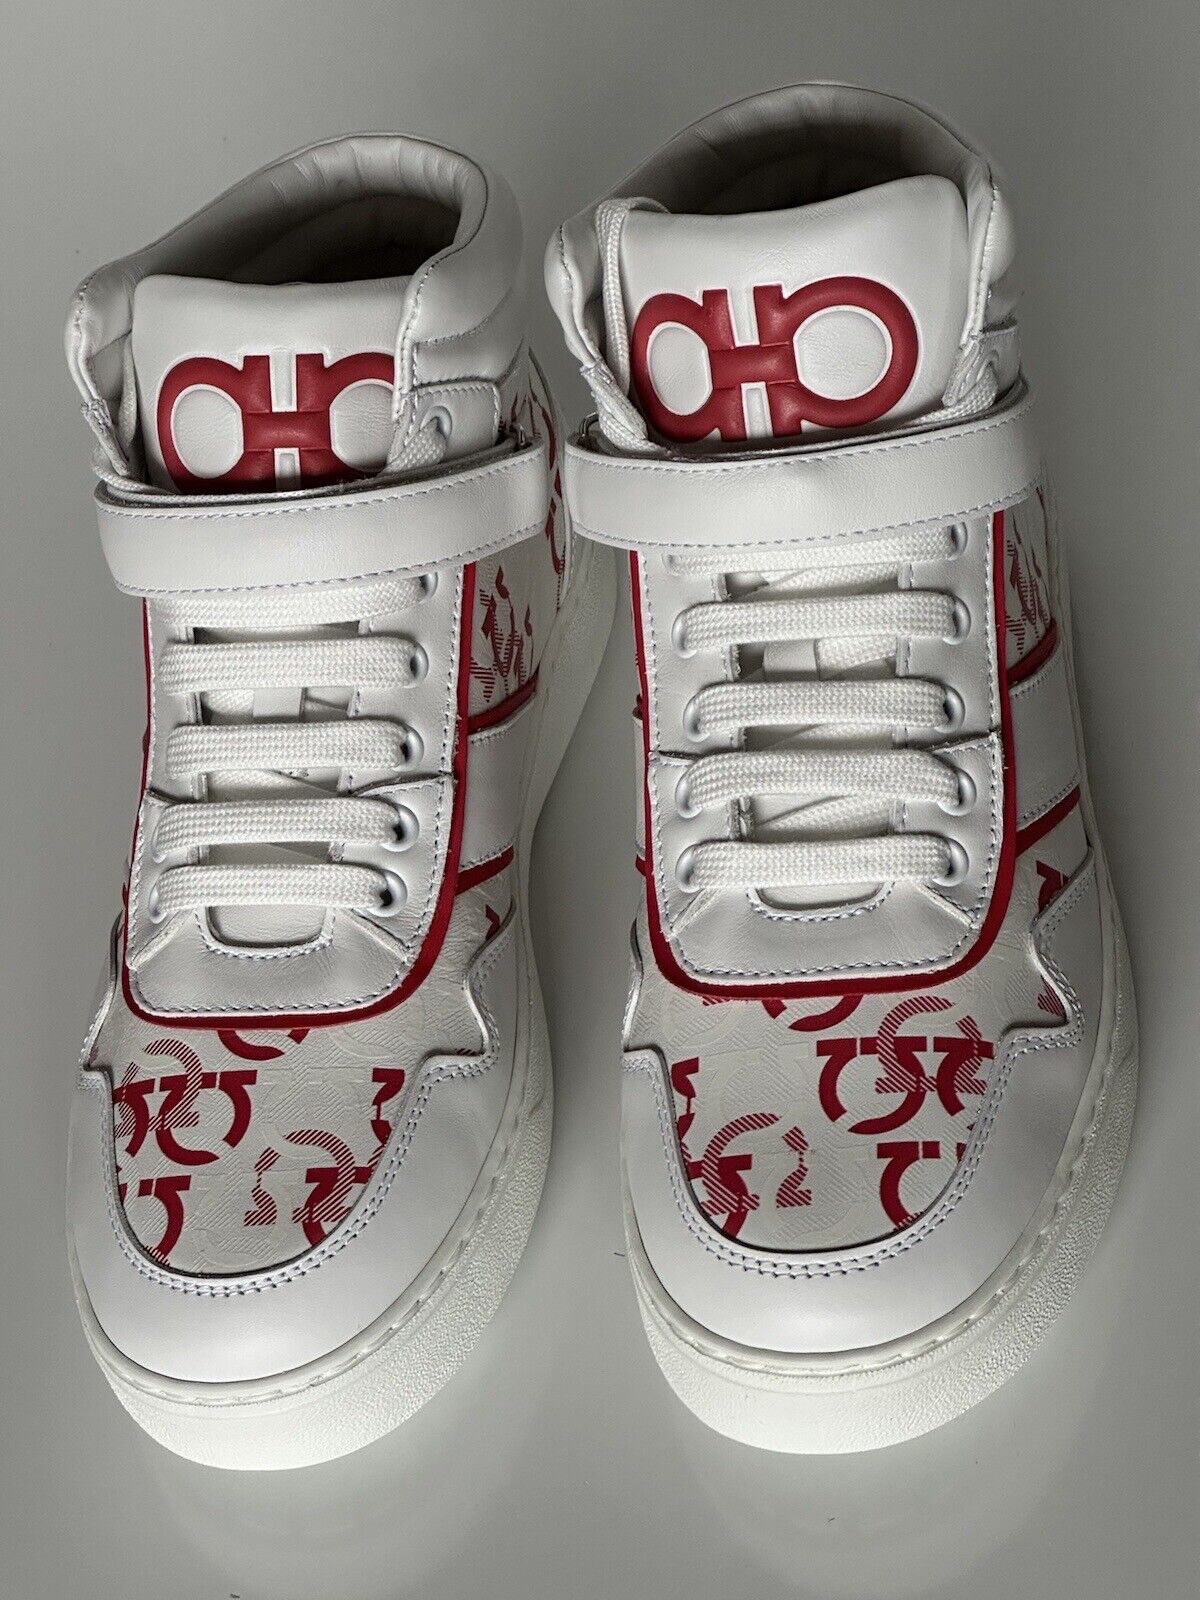 NIB Salvatore Ferragamo High Top Sneakers White Size 10 US 0756261 Made in Italy